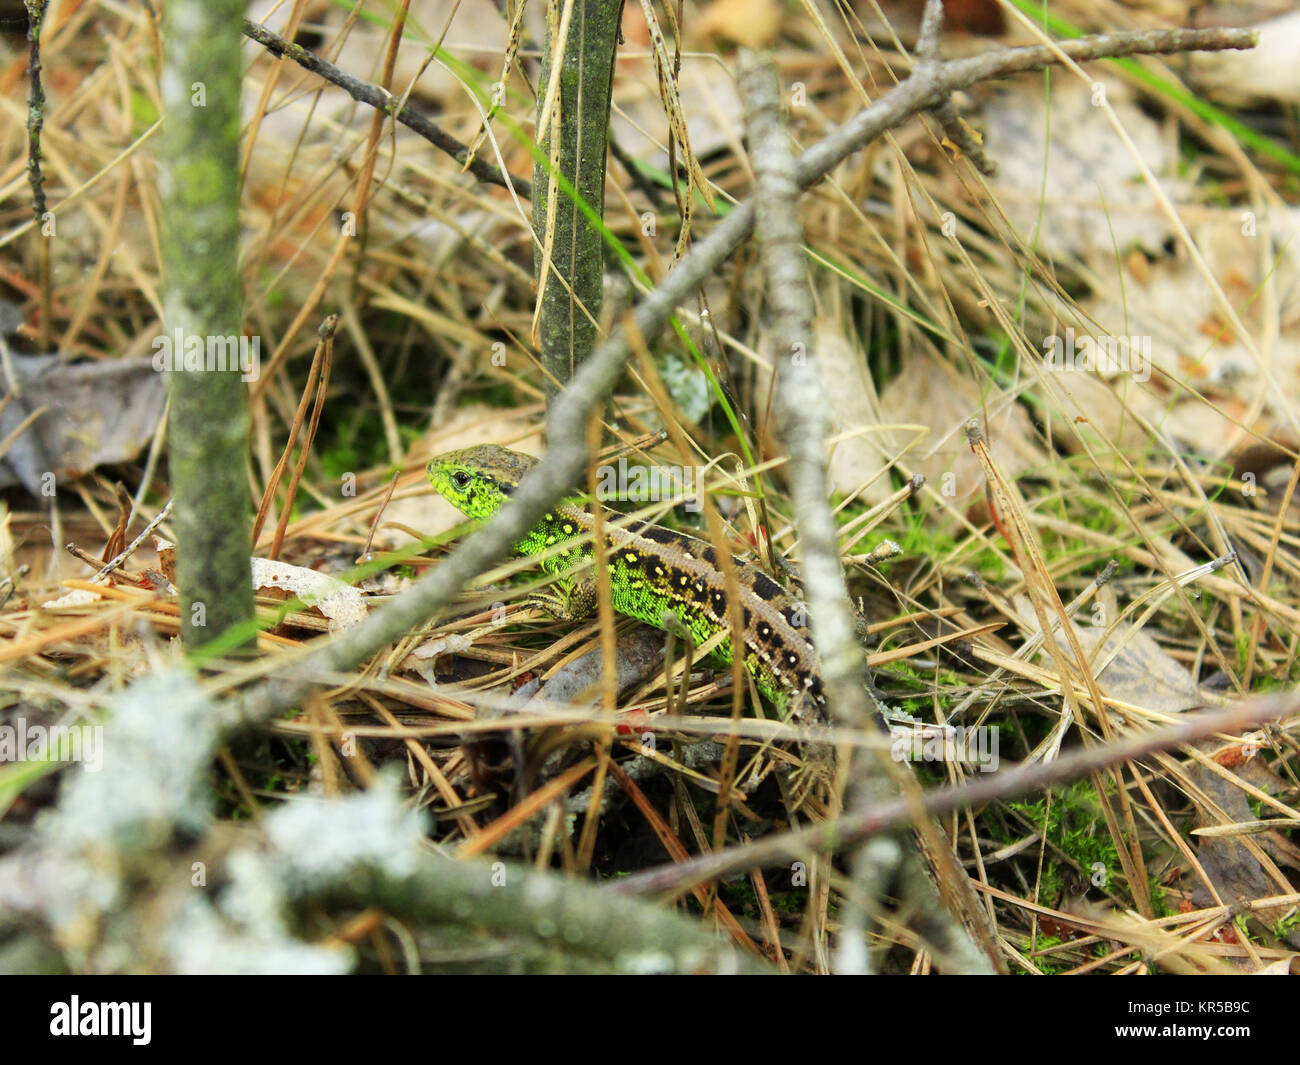 green lizard in the grass Stock Photo